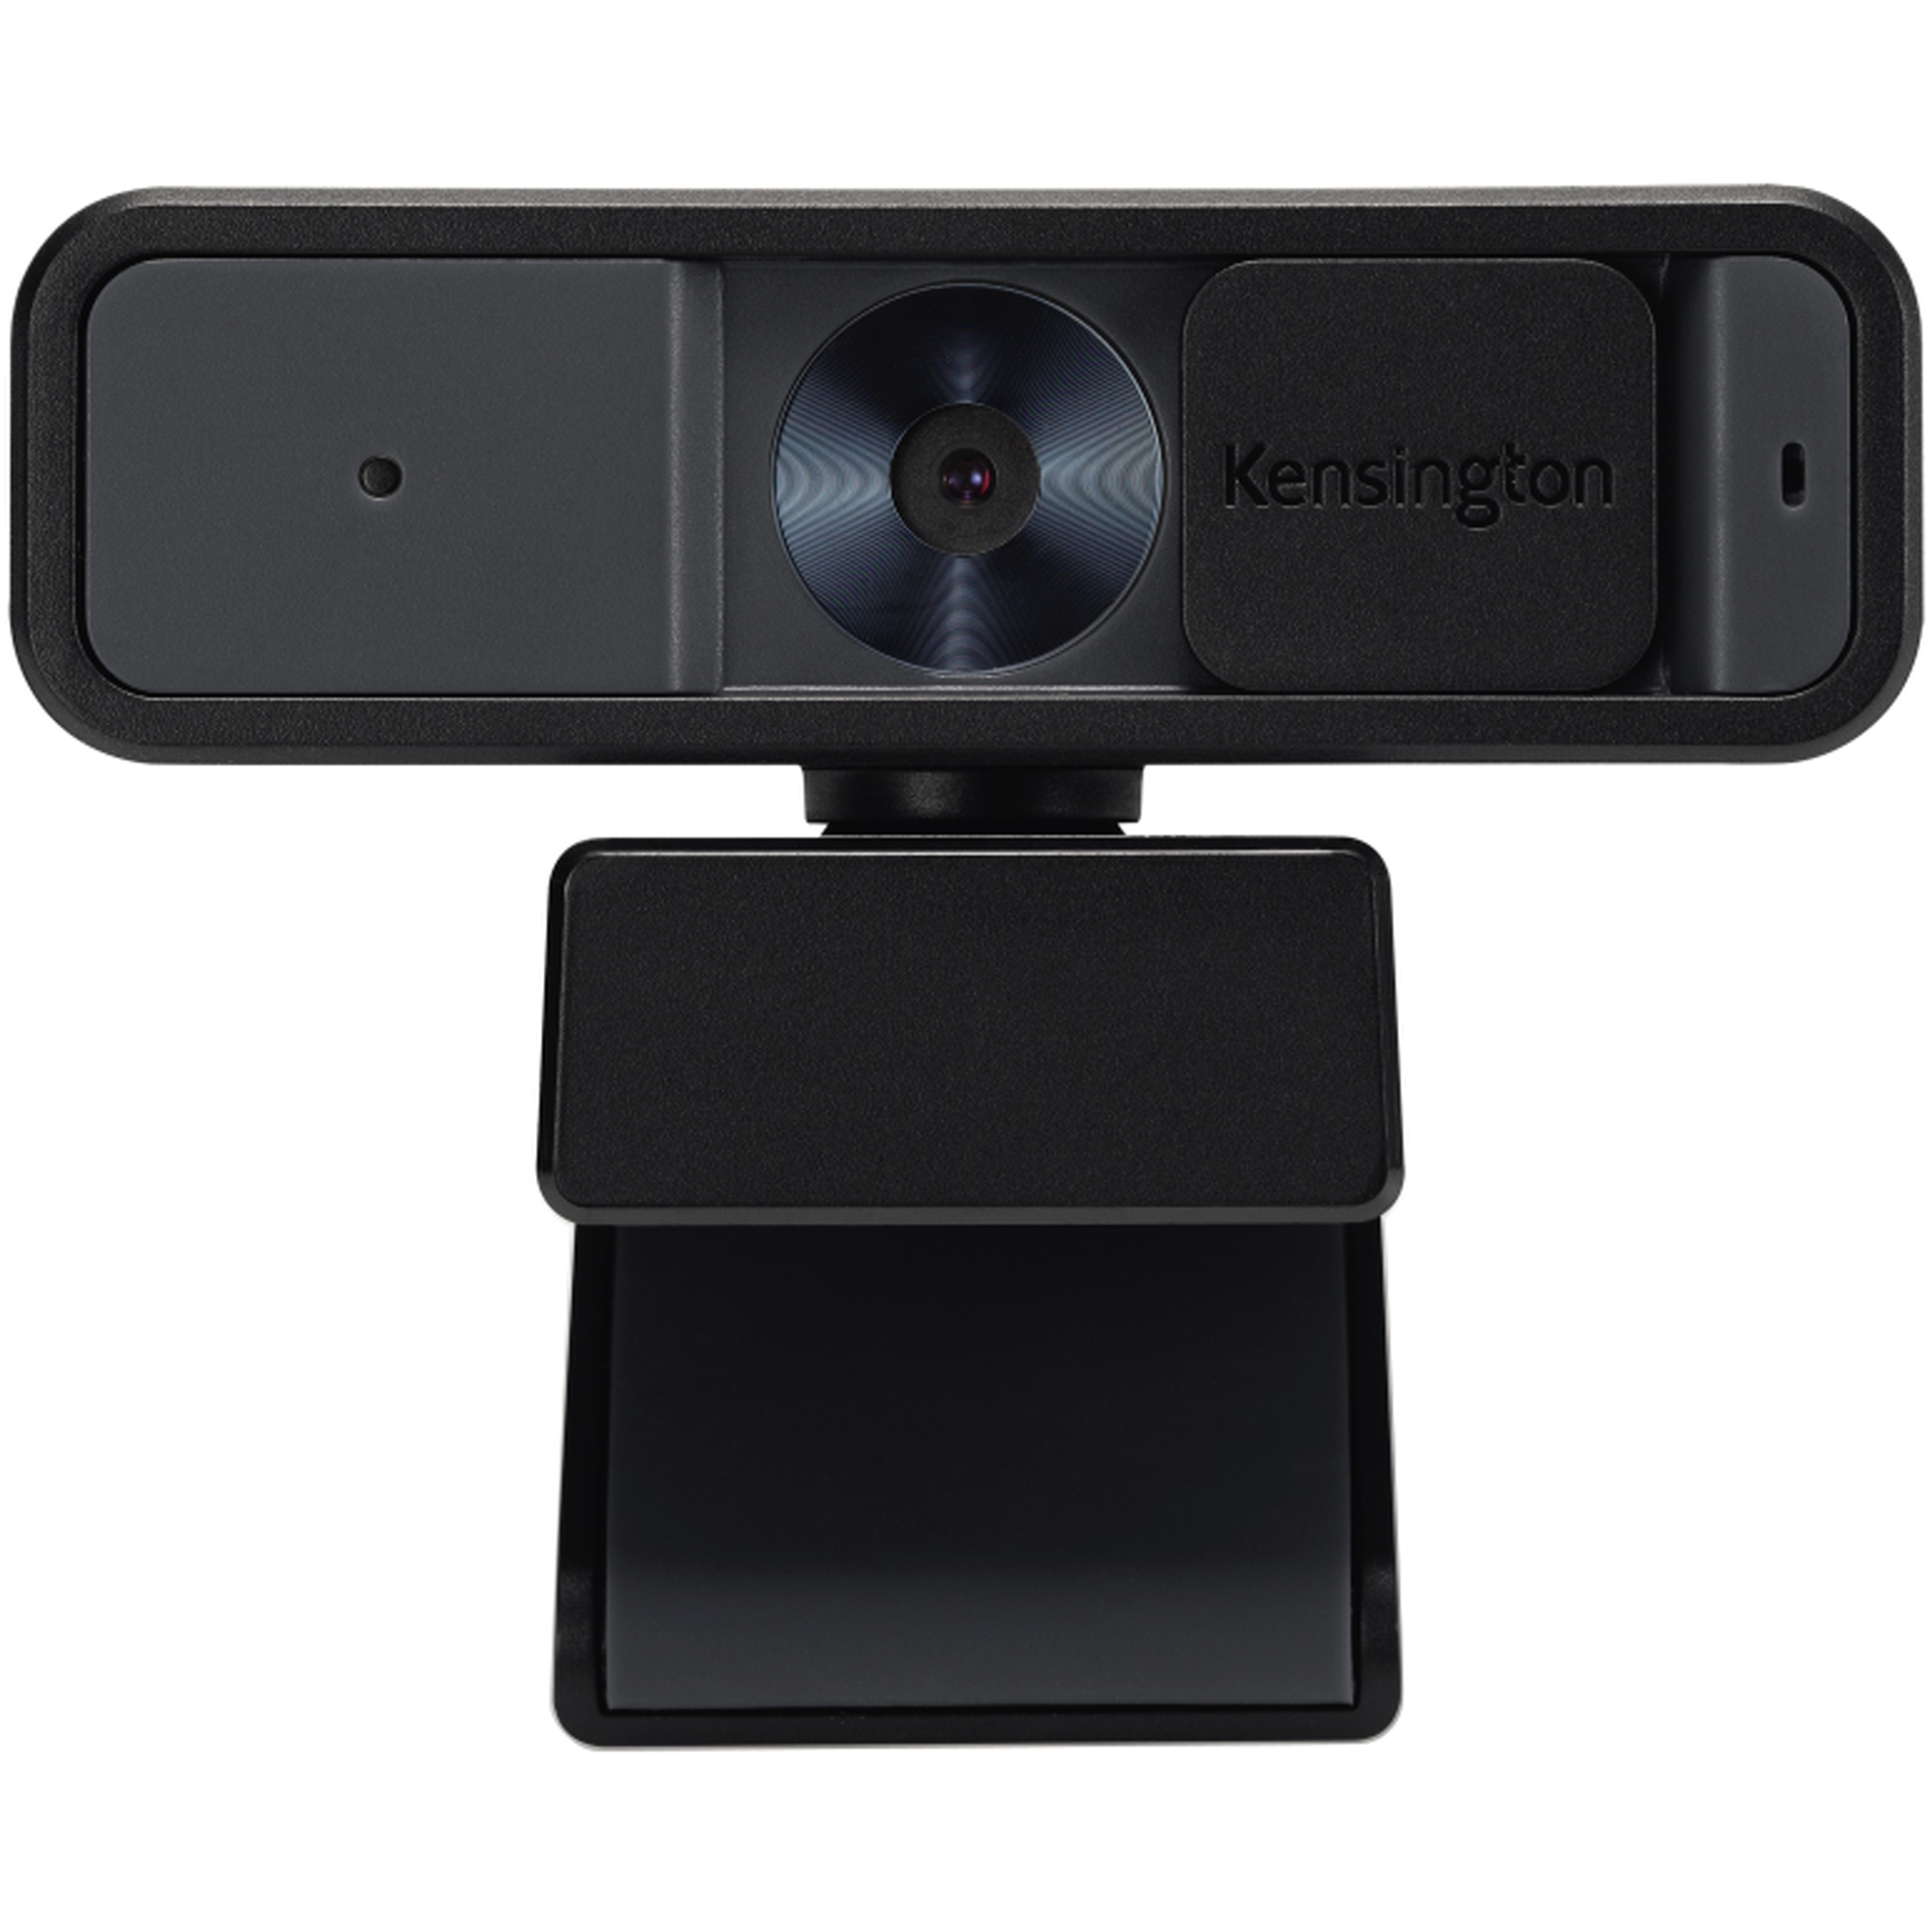 Kensington Webcam W2000 schwarz 1080p Autofocus